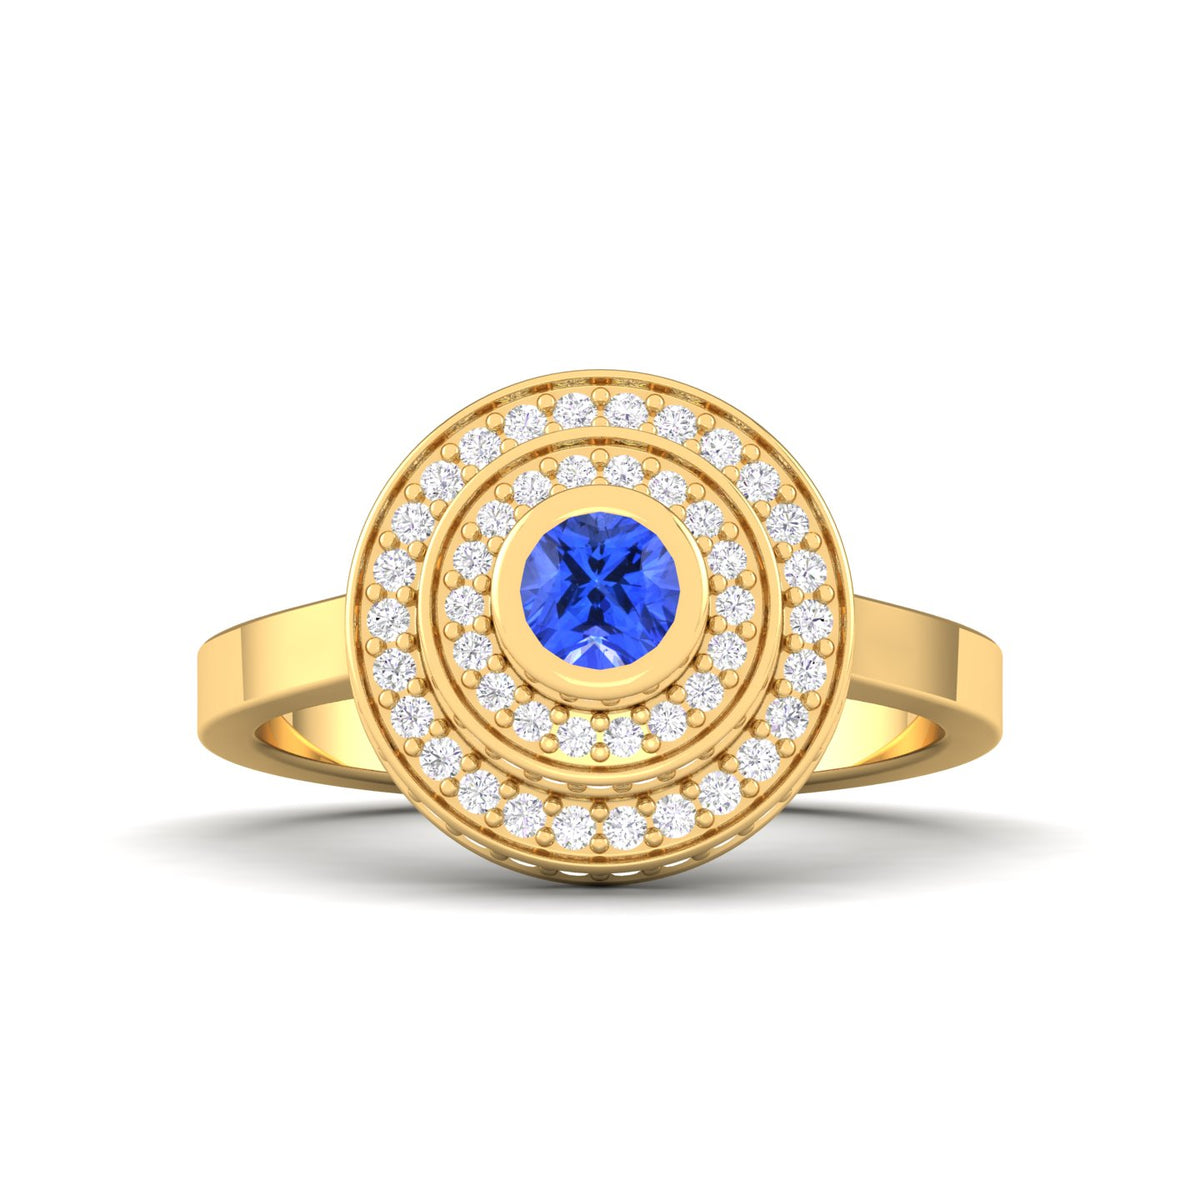 Maurya Sierra Blue Sapphire Cocktail Ring with Pave-Set Diamonds